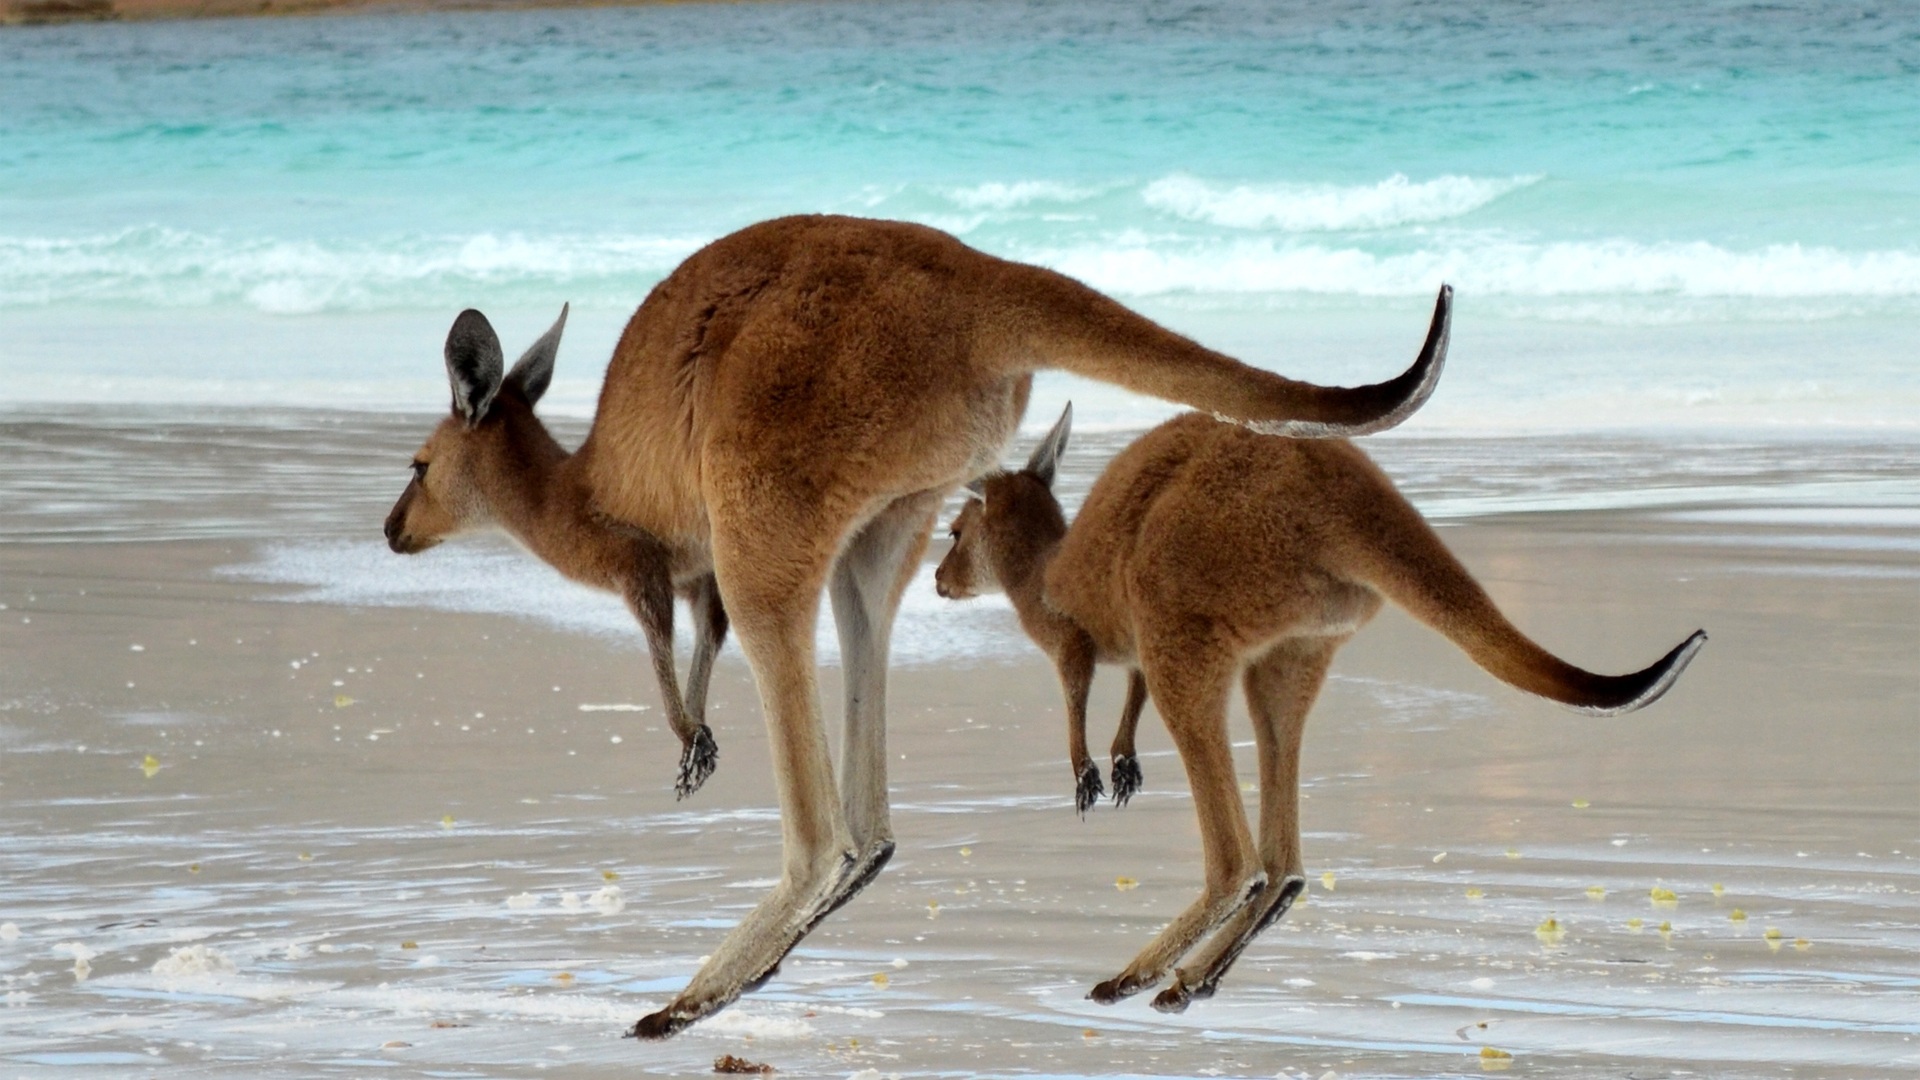 Kangaroo Wallpaper Image Photos Pictures